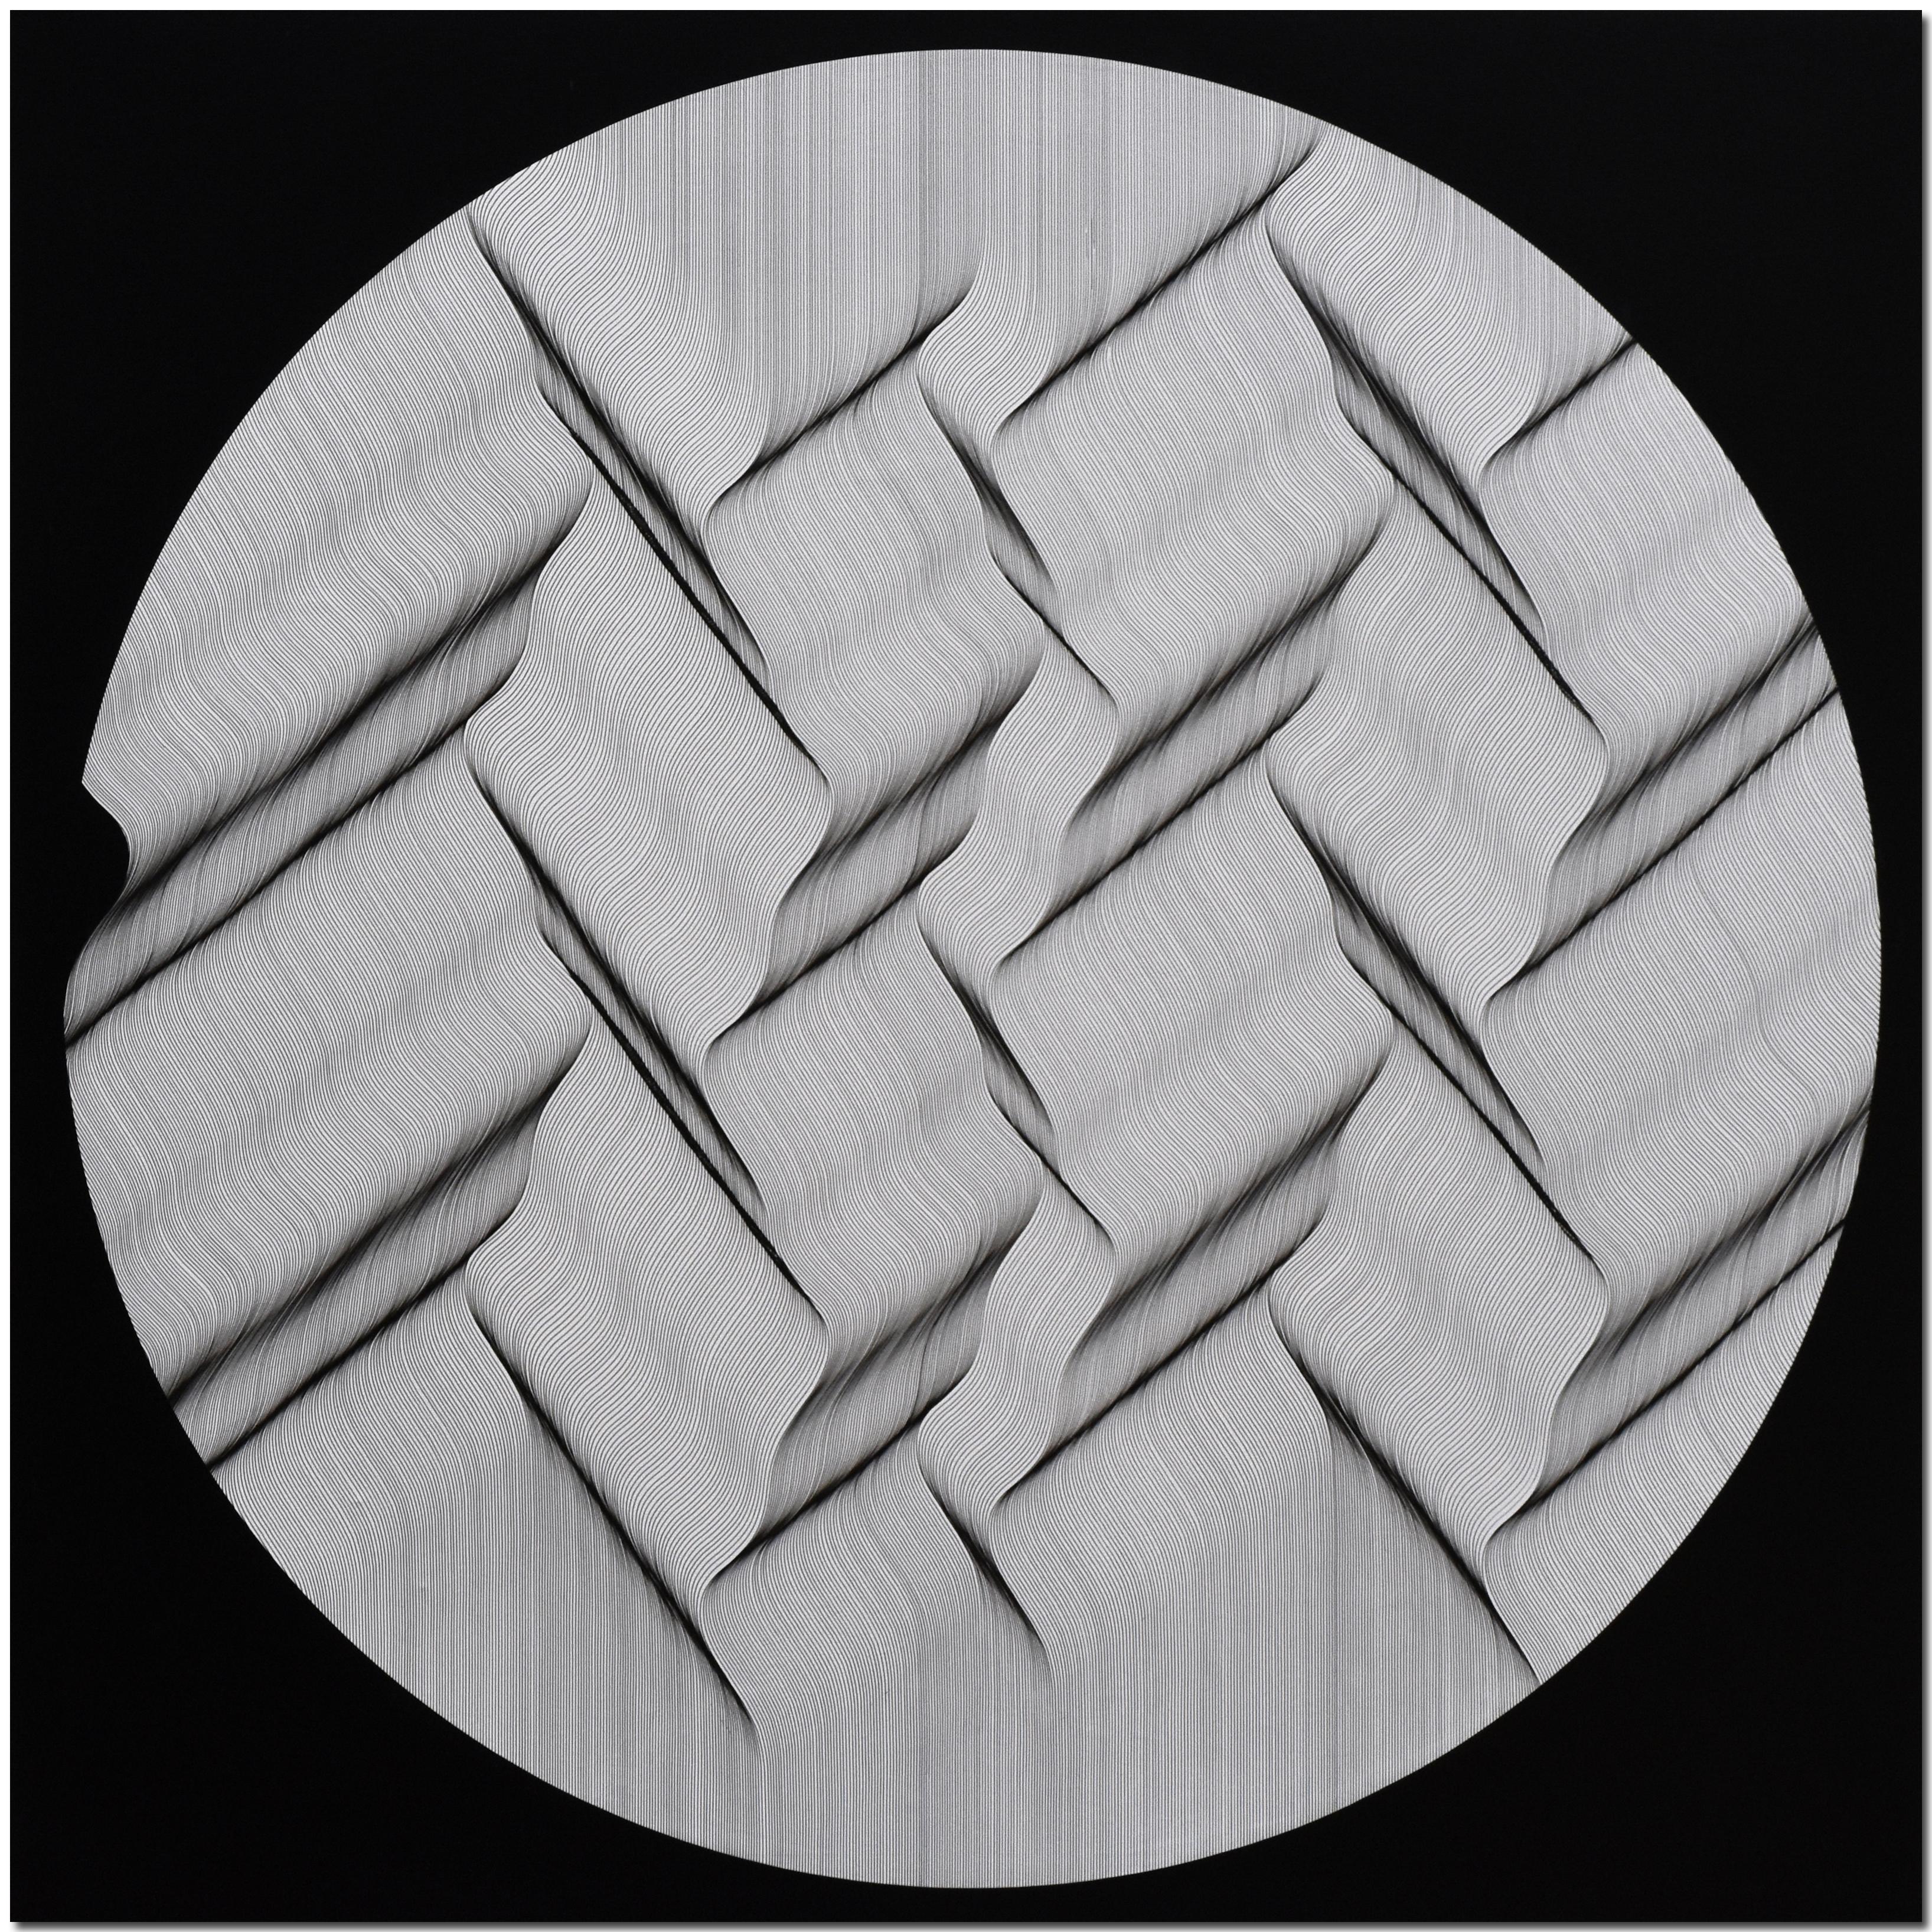 Roberto Lucchetta Abstract Painting - Bianco Nero 2018 - Geometric abstract painting